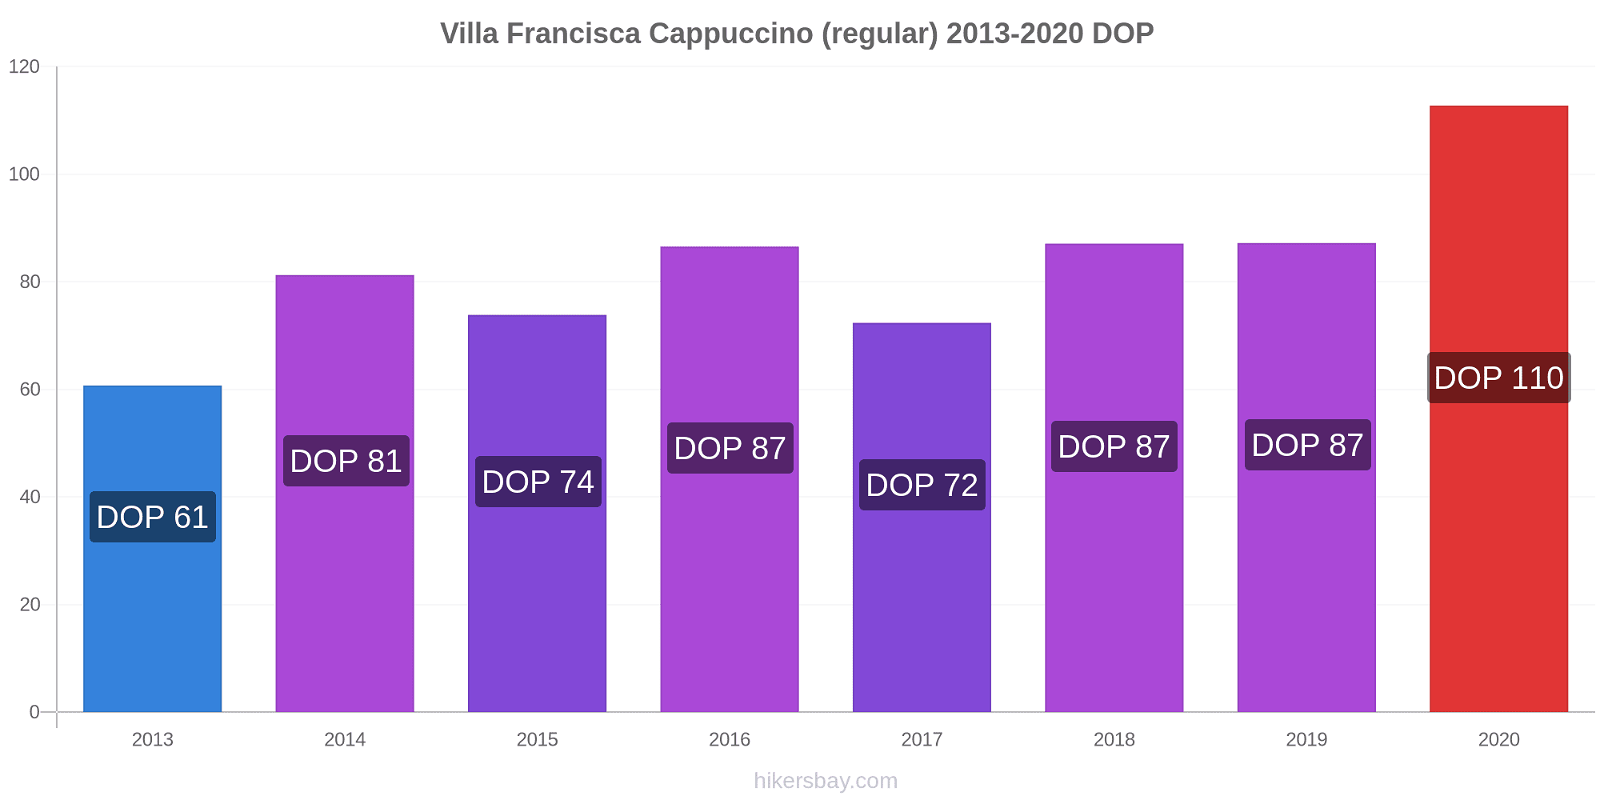 Villa Francisca price changes Cappuccino (regular) hikersbay.com